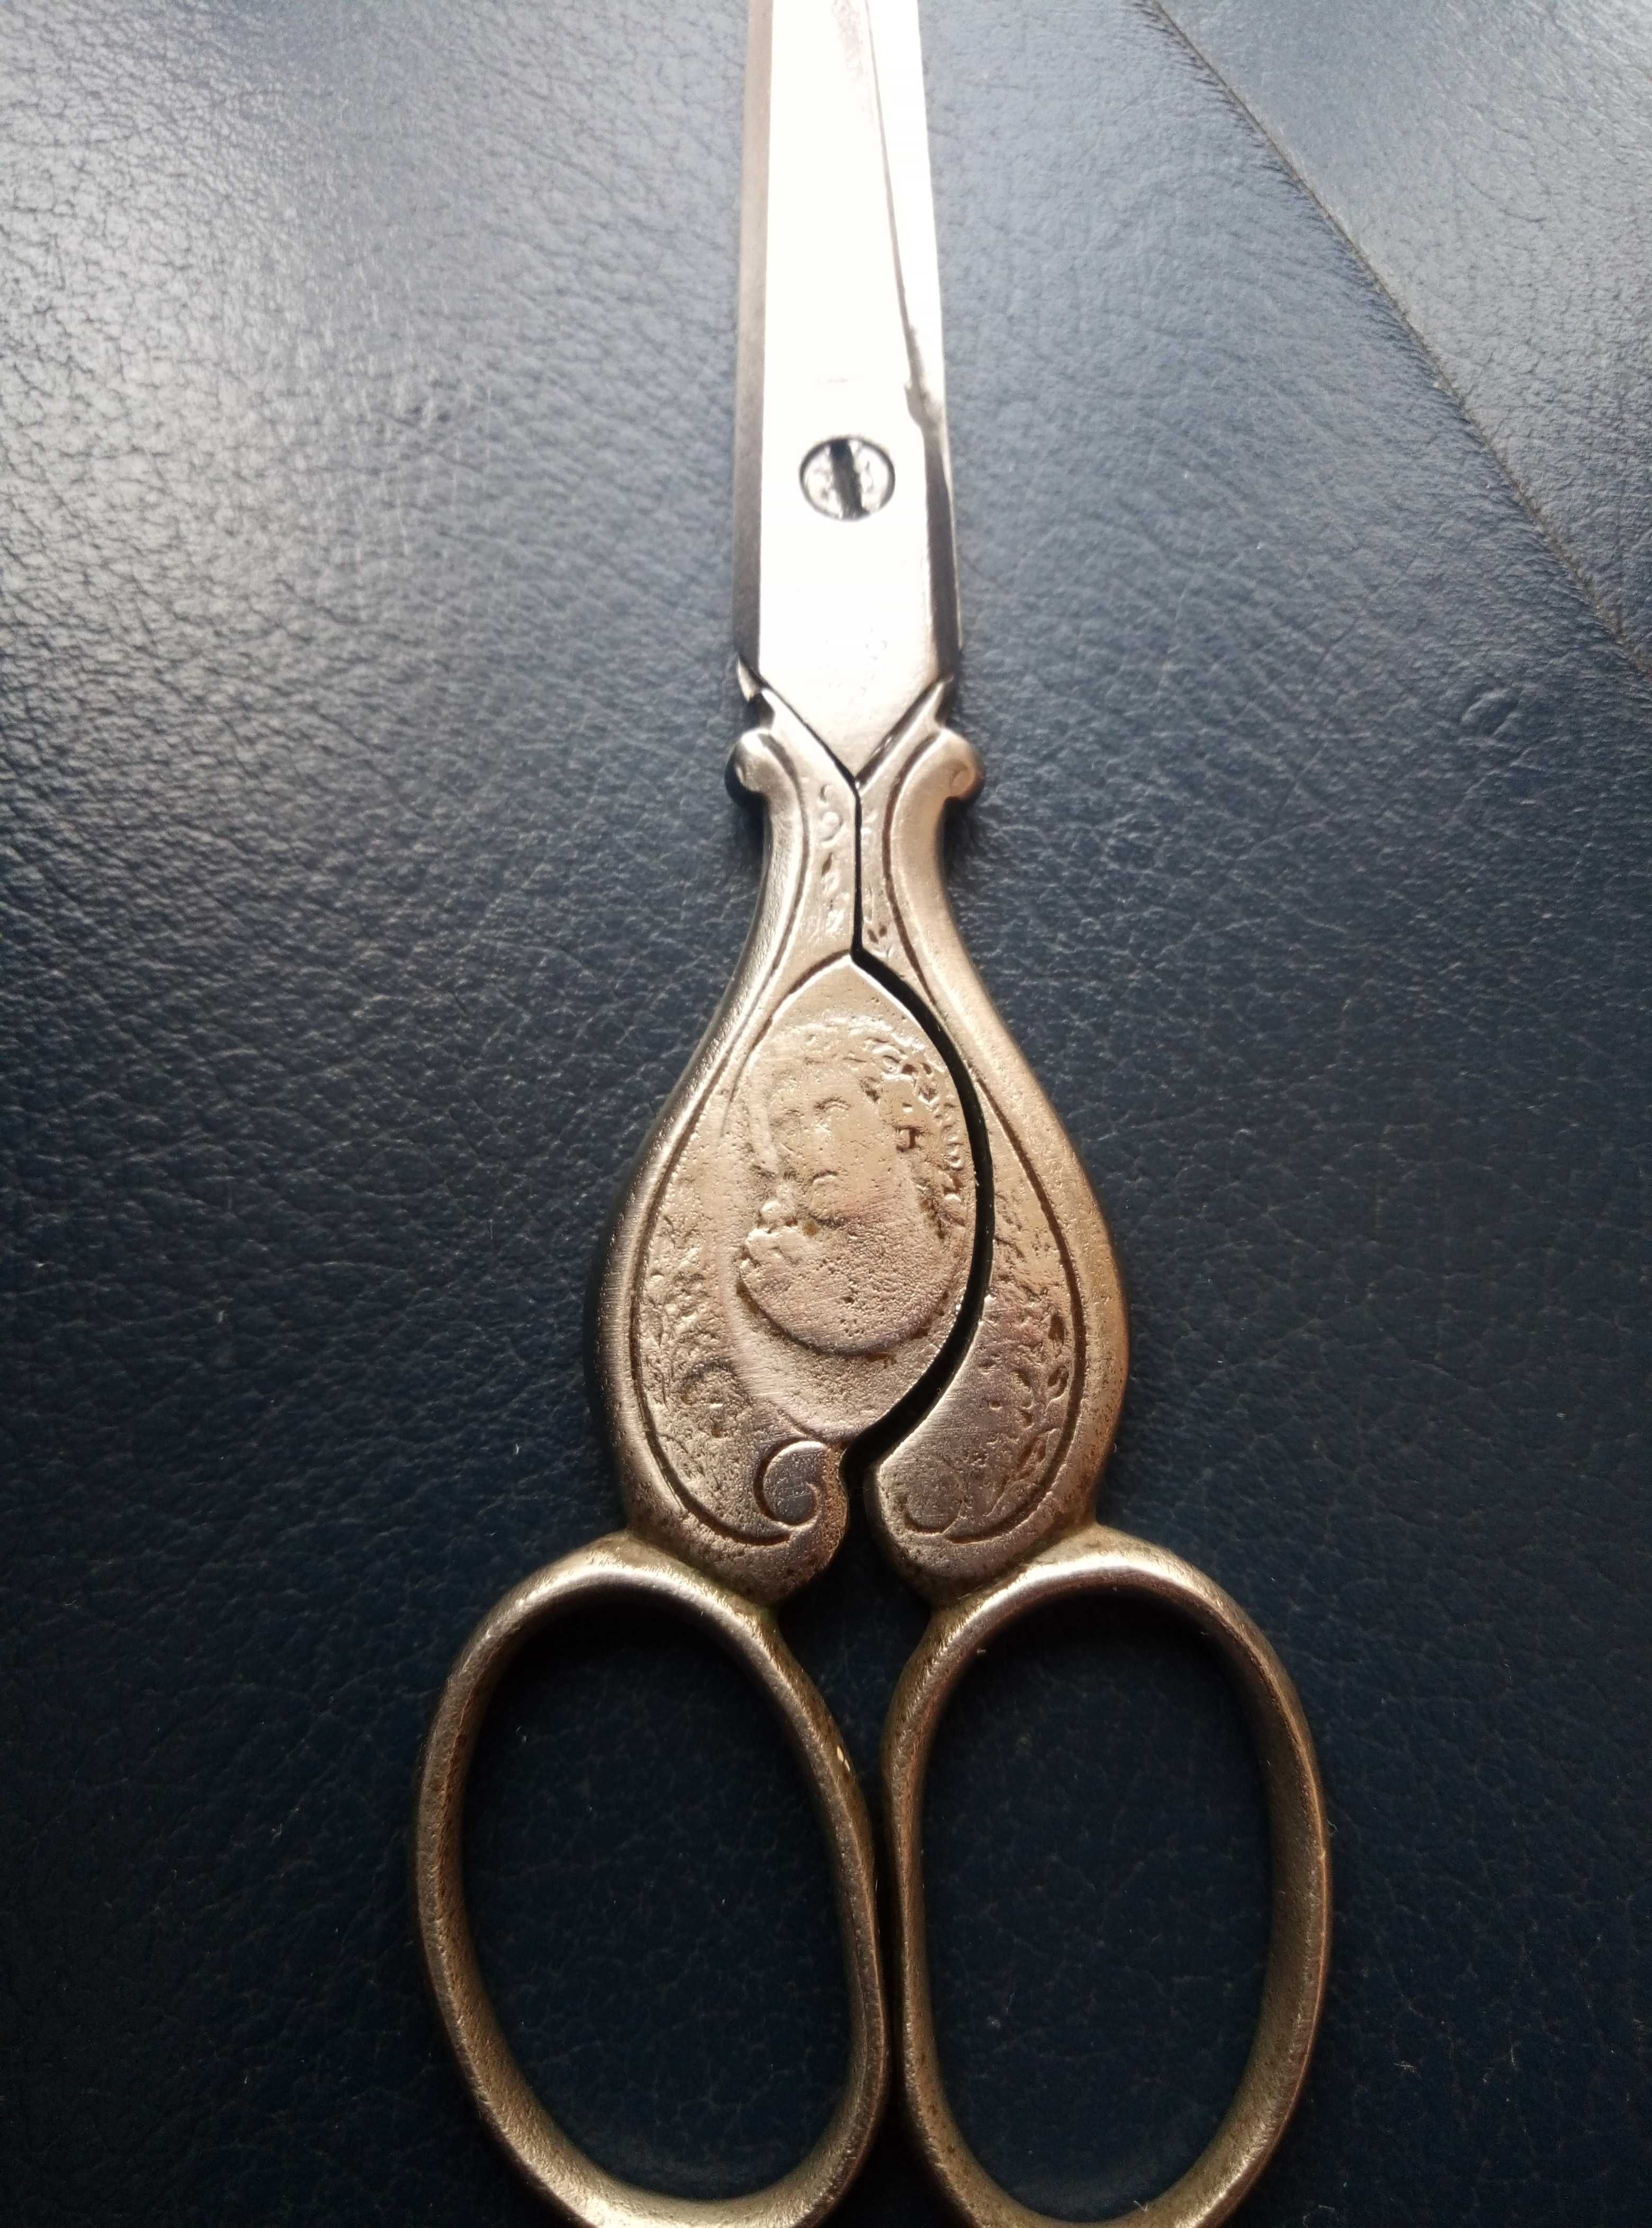 German Solingen Cristianity Religious ornate scissors- 19th century